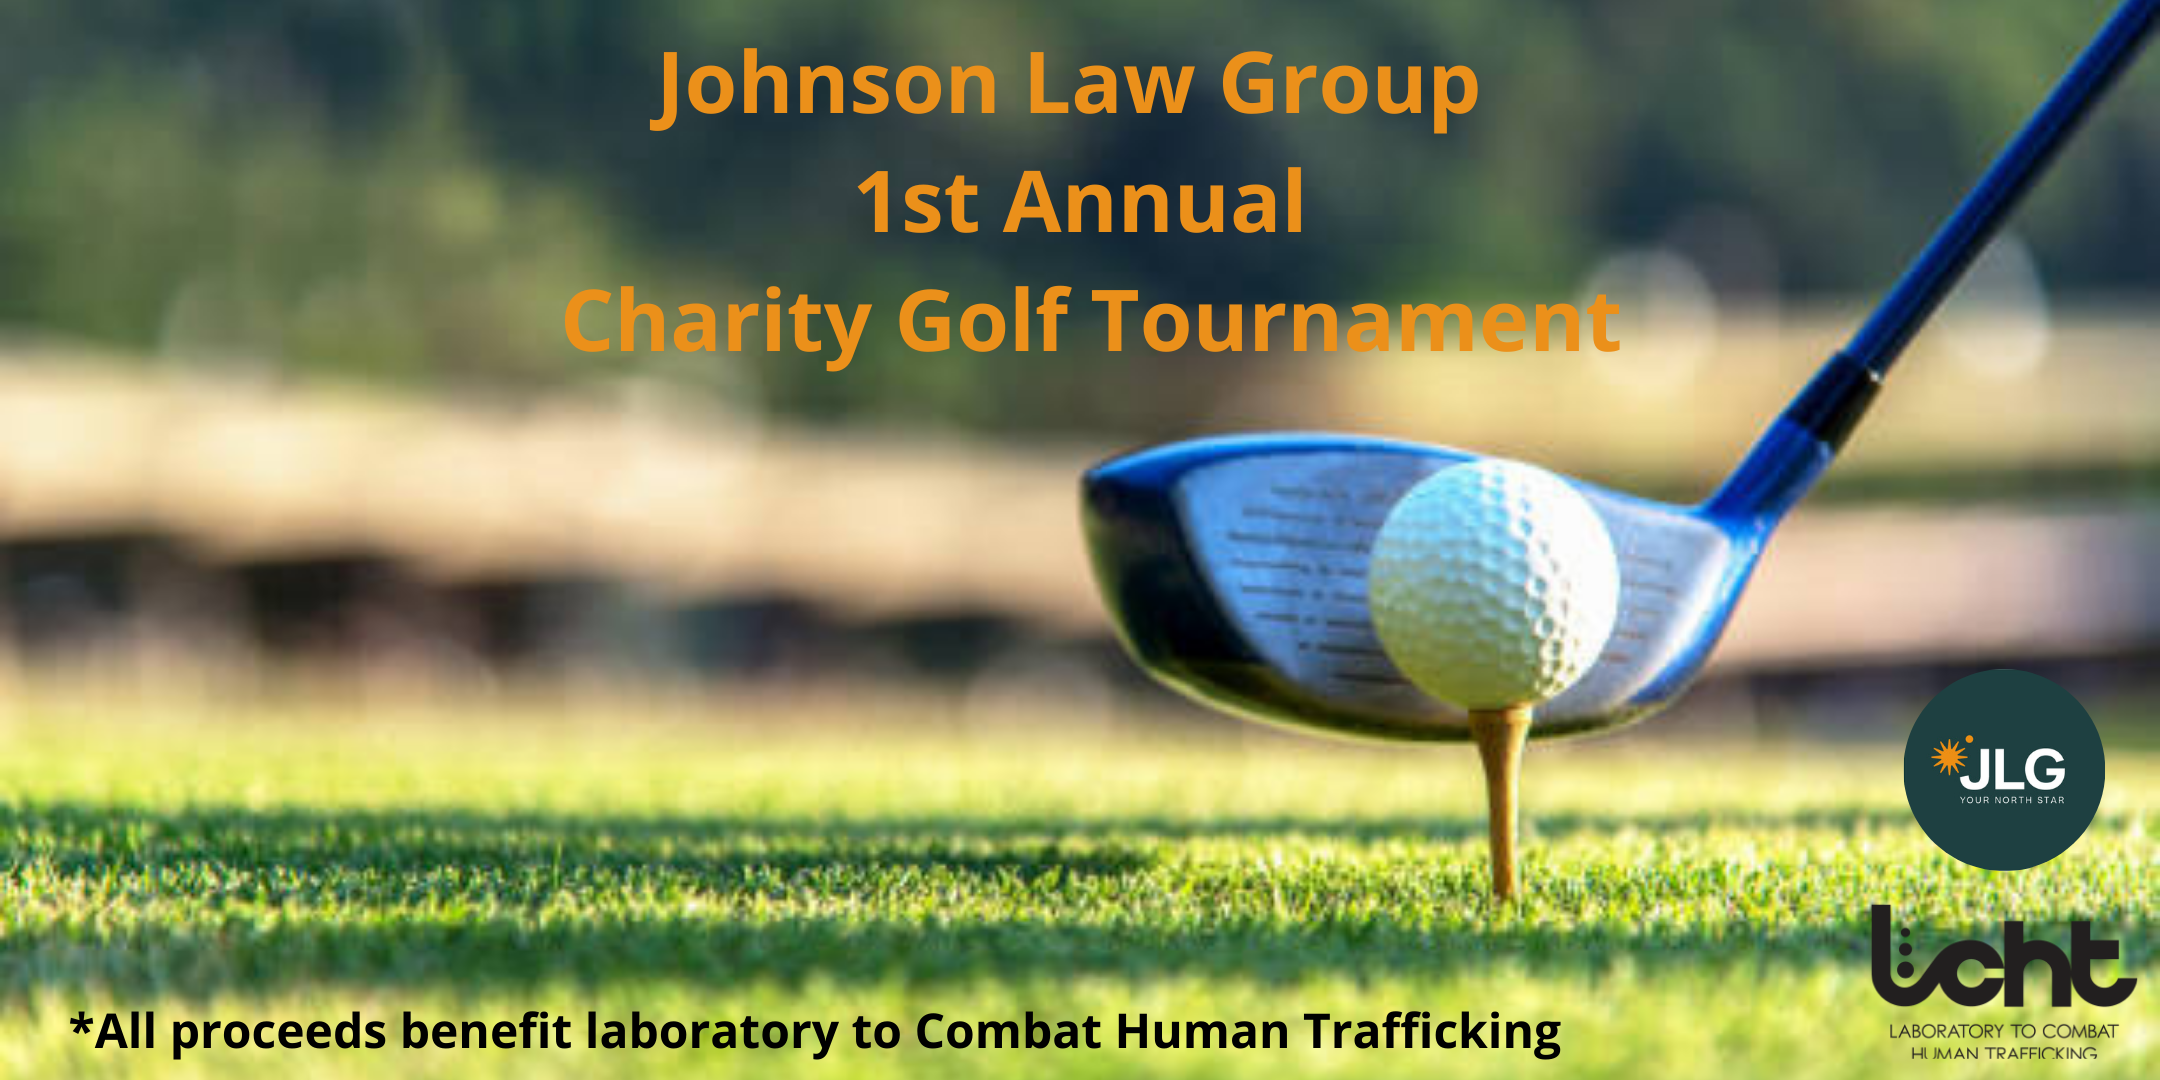 JLG Charity Golf Tournament!!! Located at Buffalo Run Golf Course!